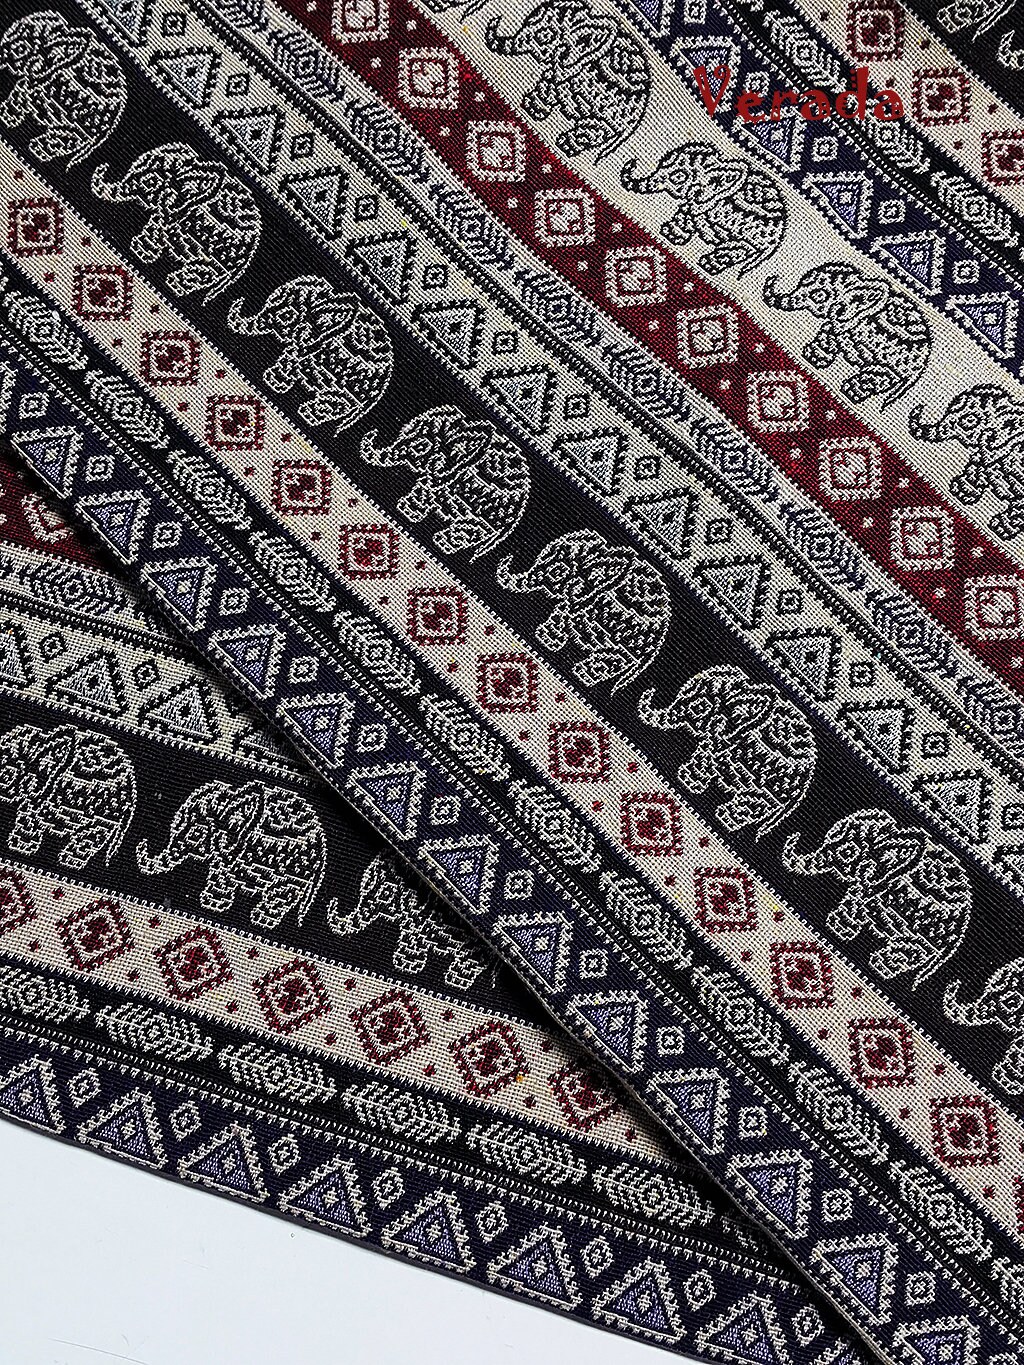 Thai Woven Fabric Tribal Fabric Cotton Fabric Ethnic Fabric | Etsy